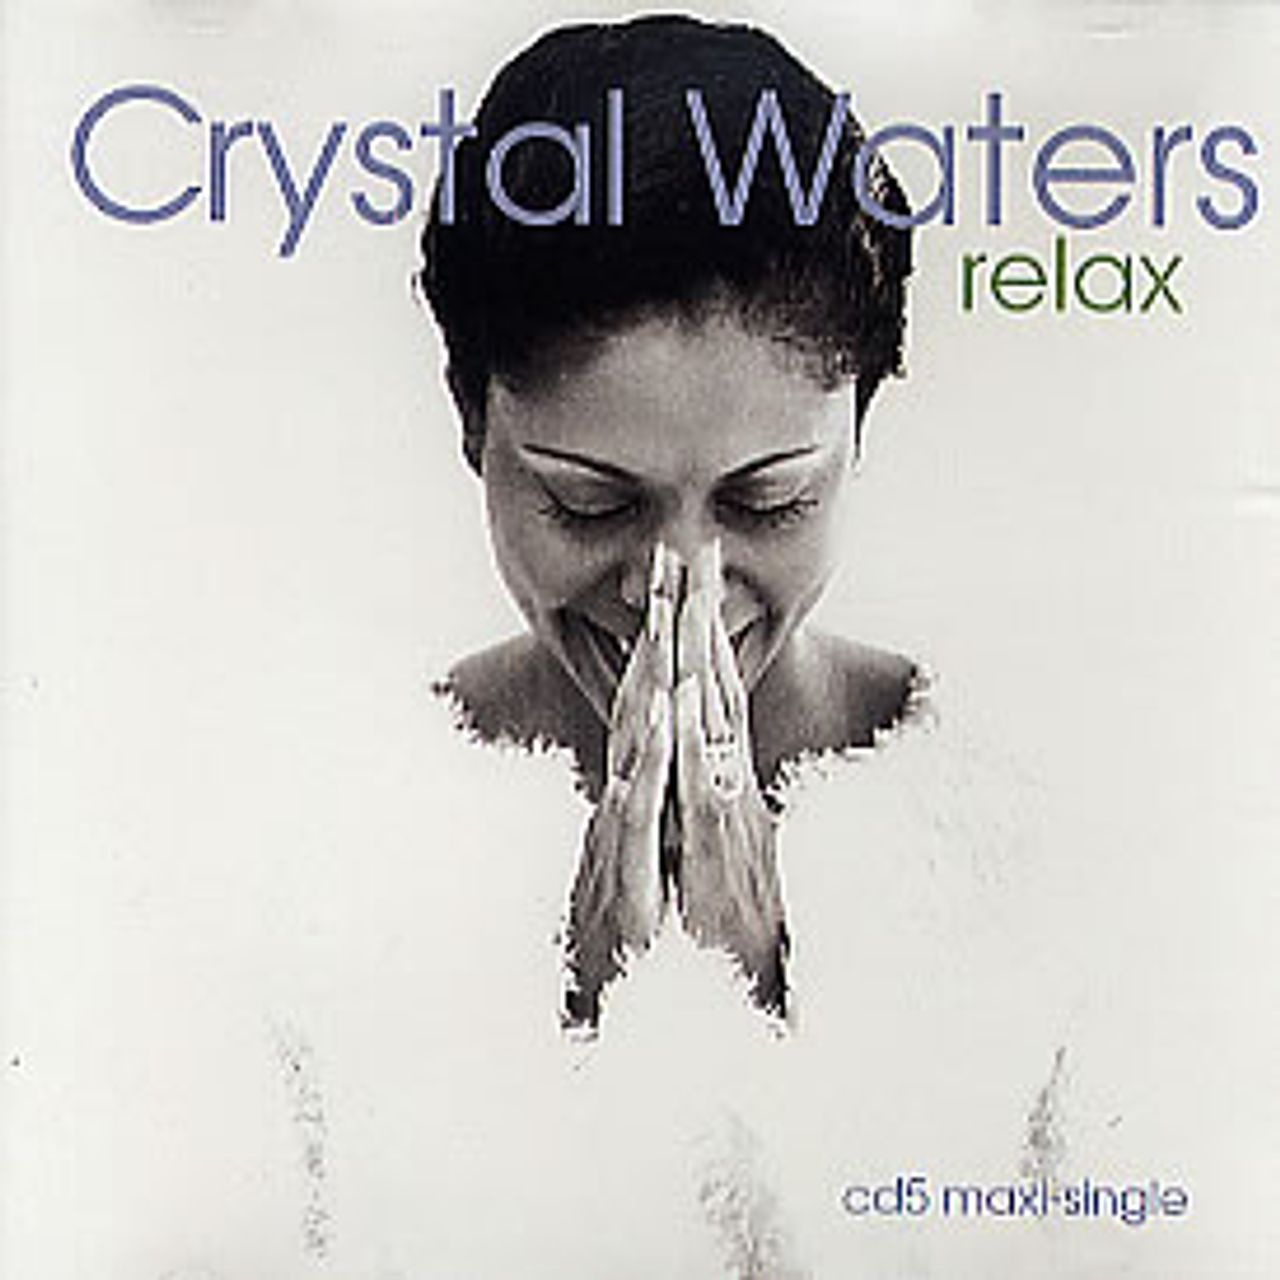 Crystal Waters Relax US CD single — RareVinyl.com